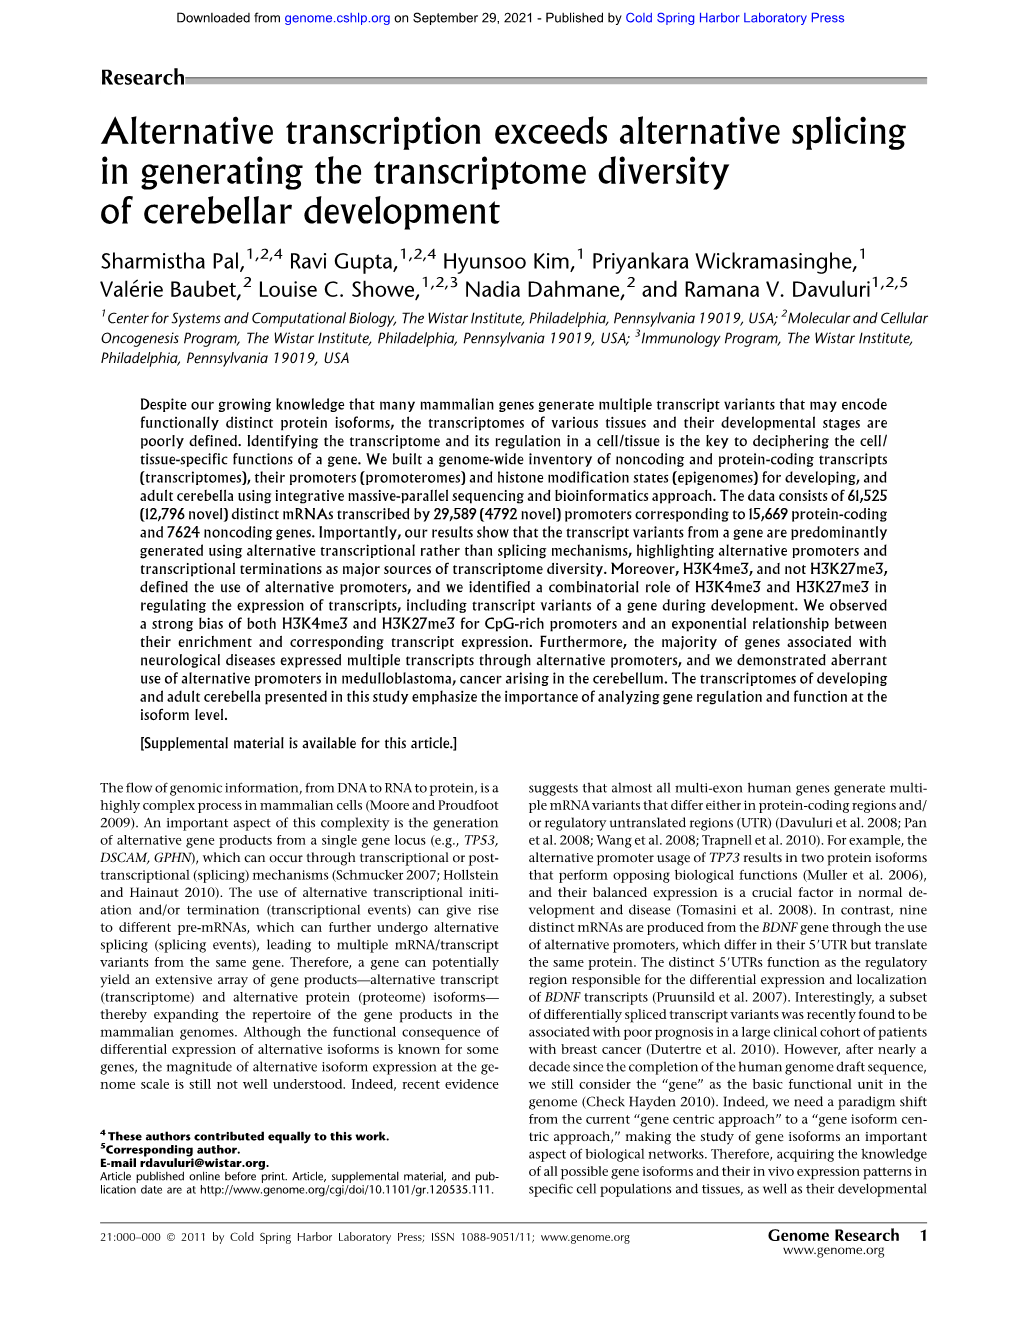 Alternative Transcription Exceeds Alternative Splicing in Generating the Transcriptome Diversity of Cerebellar Development